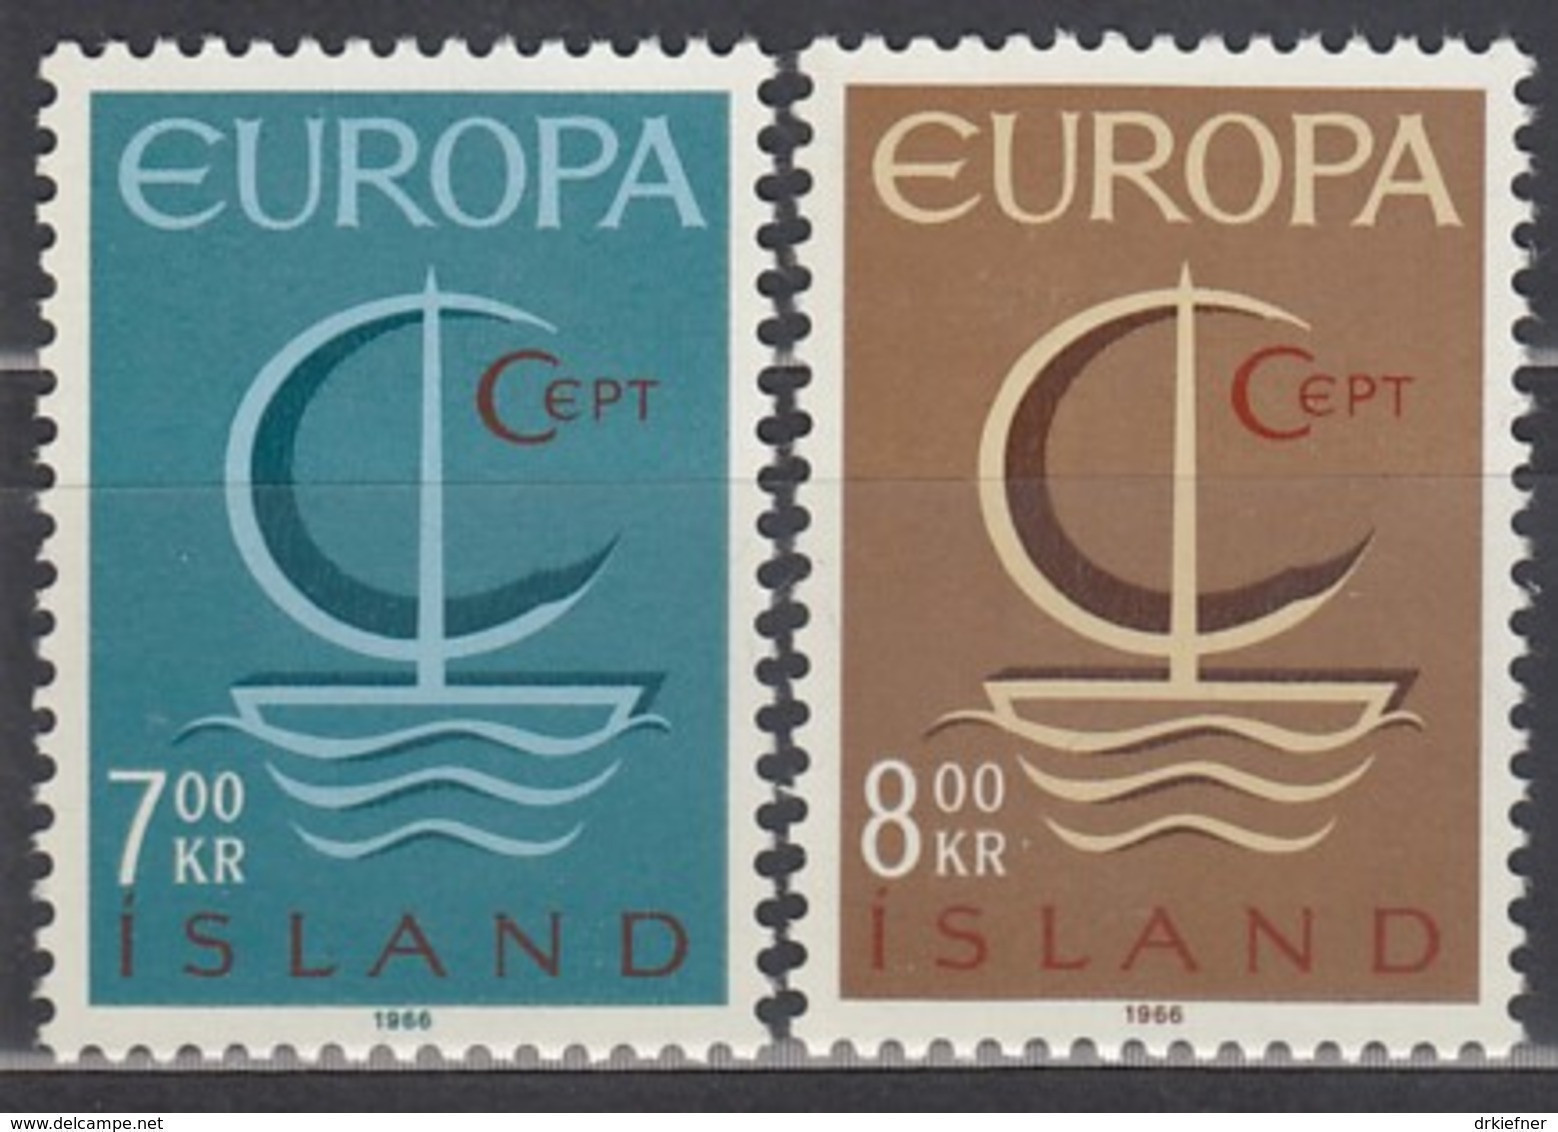 ISLAND  404-405, Postfrisch **, Europa CEPT 1966 - Ongebruikt